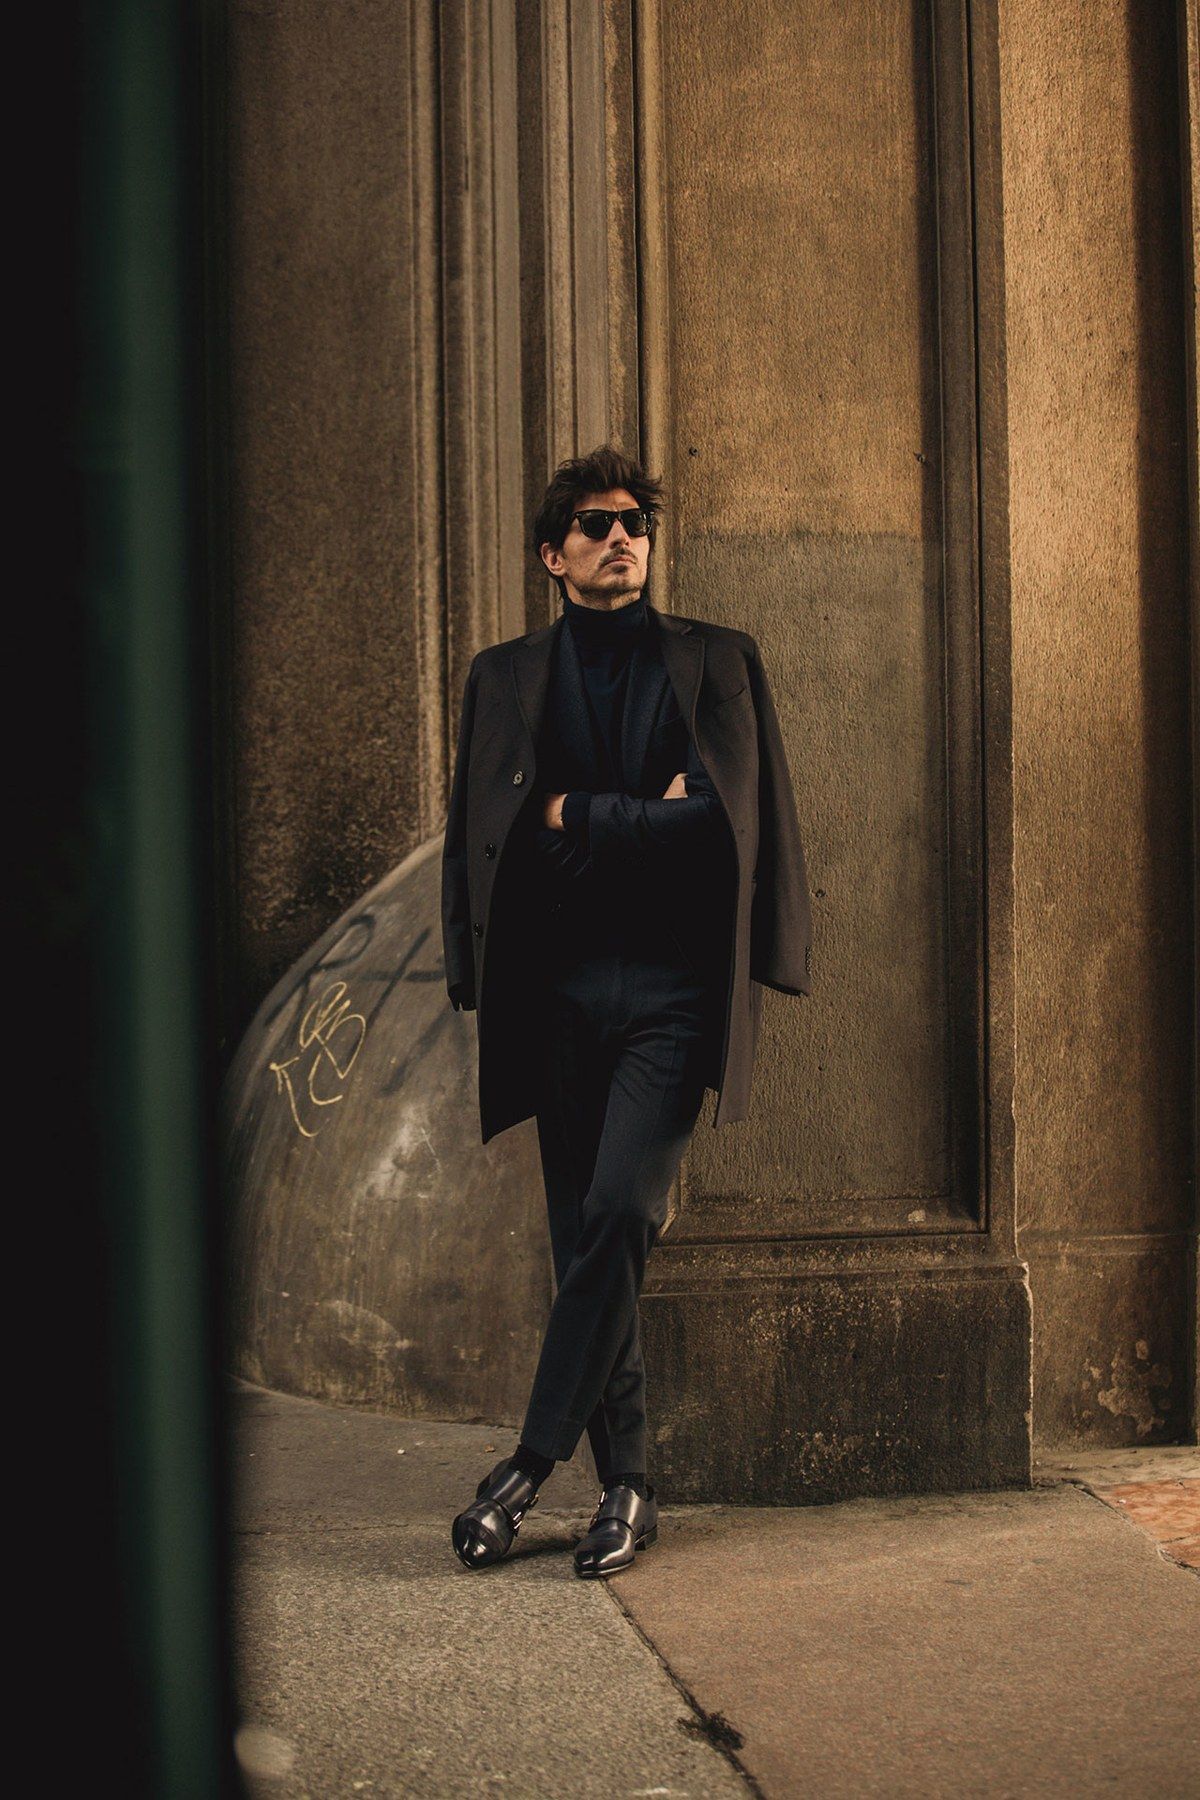 Milano Moda Uomo 2019: street style, look e tendenze - Milano Moda Uomo 2019: street style, look e tendenze -   22 style Street homme ideas